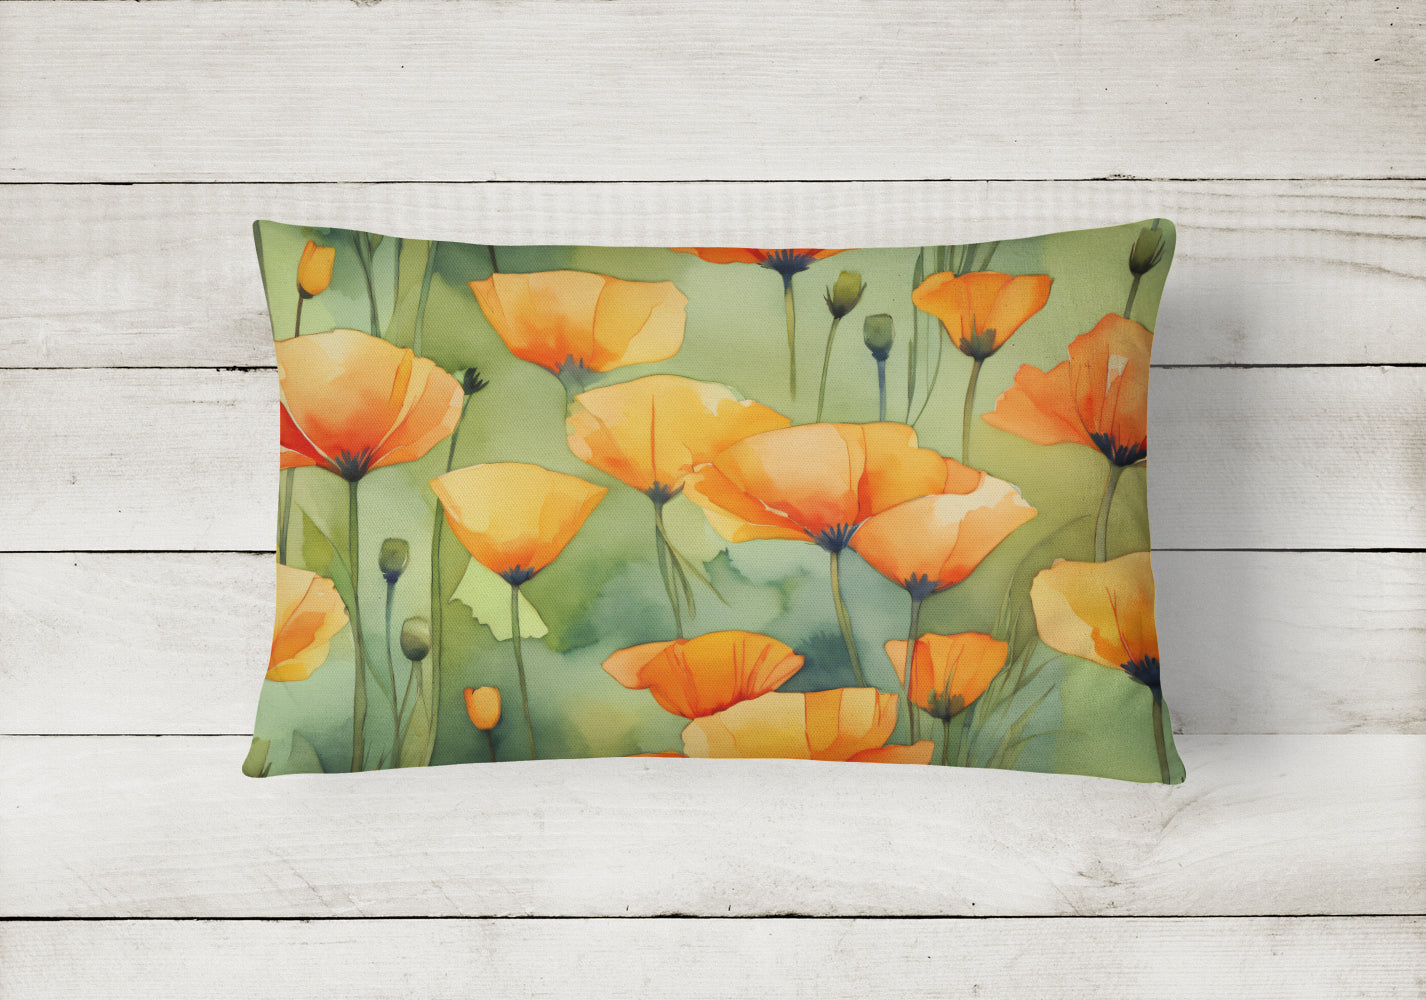 Buy this California California Poppies in Watercolor Fabric Decorative Pillow